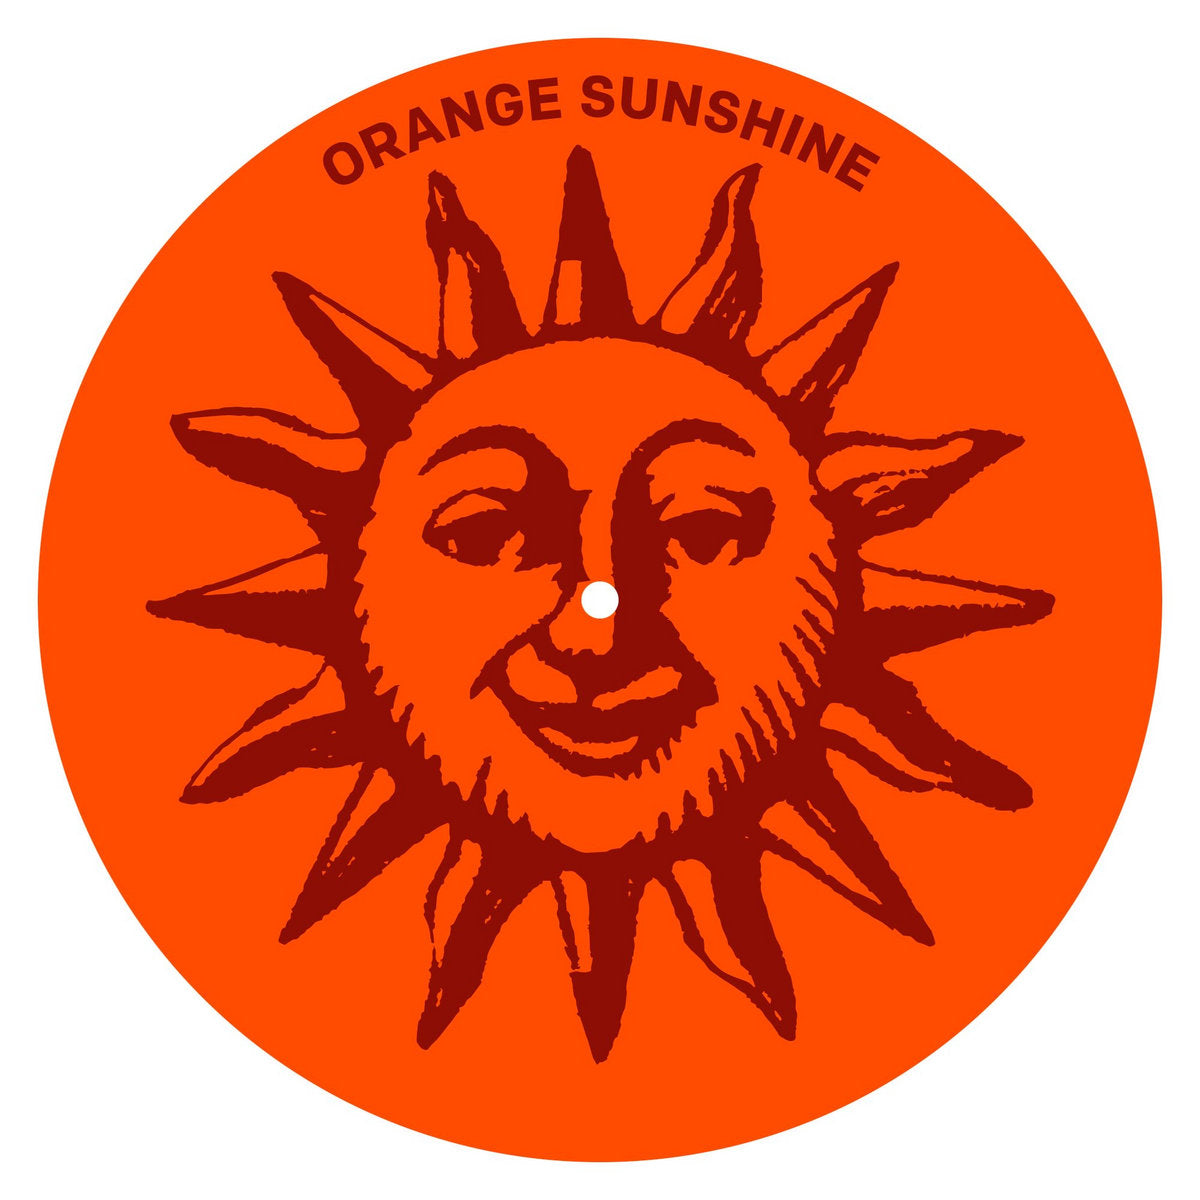 HiFi Sean, David McAlmont - Daylight: Limited Deluxe Orange Vinyl LP, Bonus 7" Flexi Disc + Signed Print